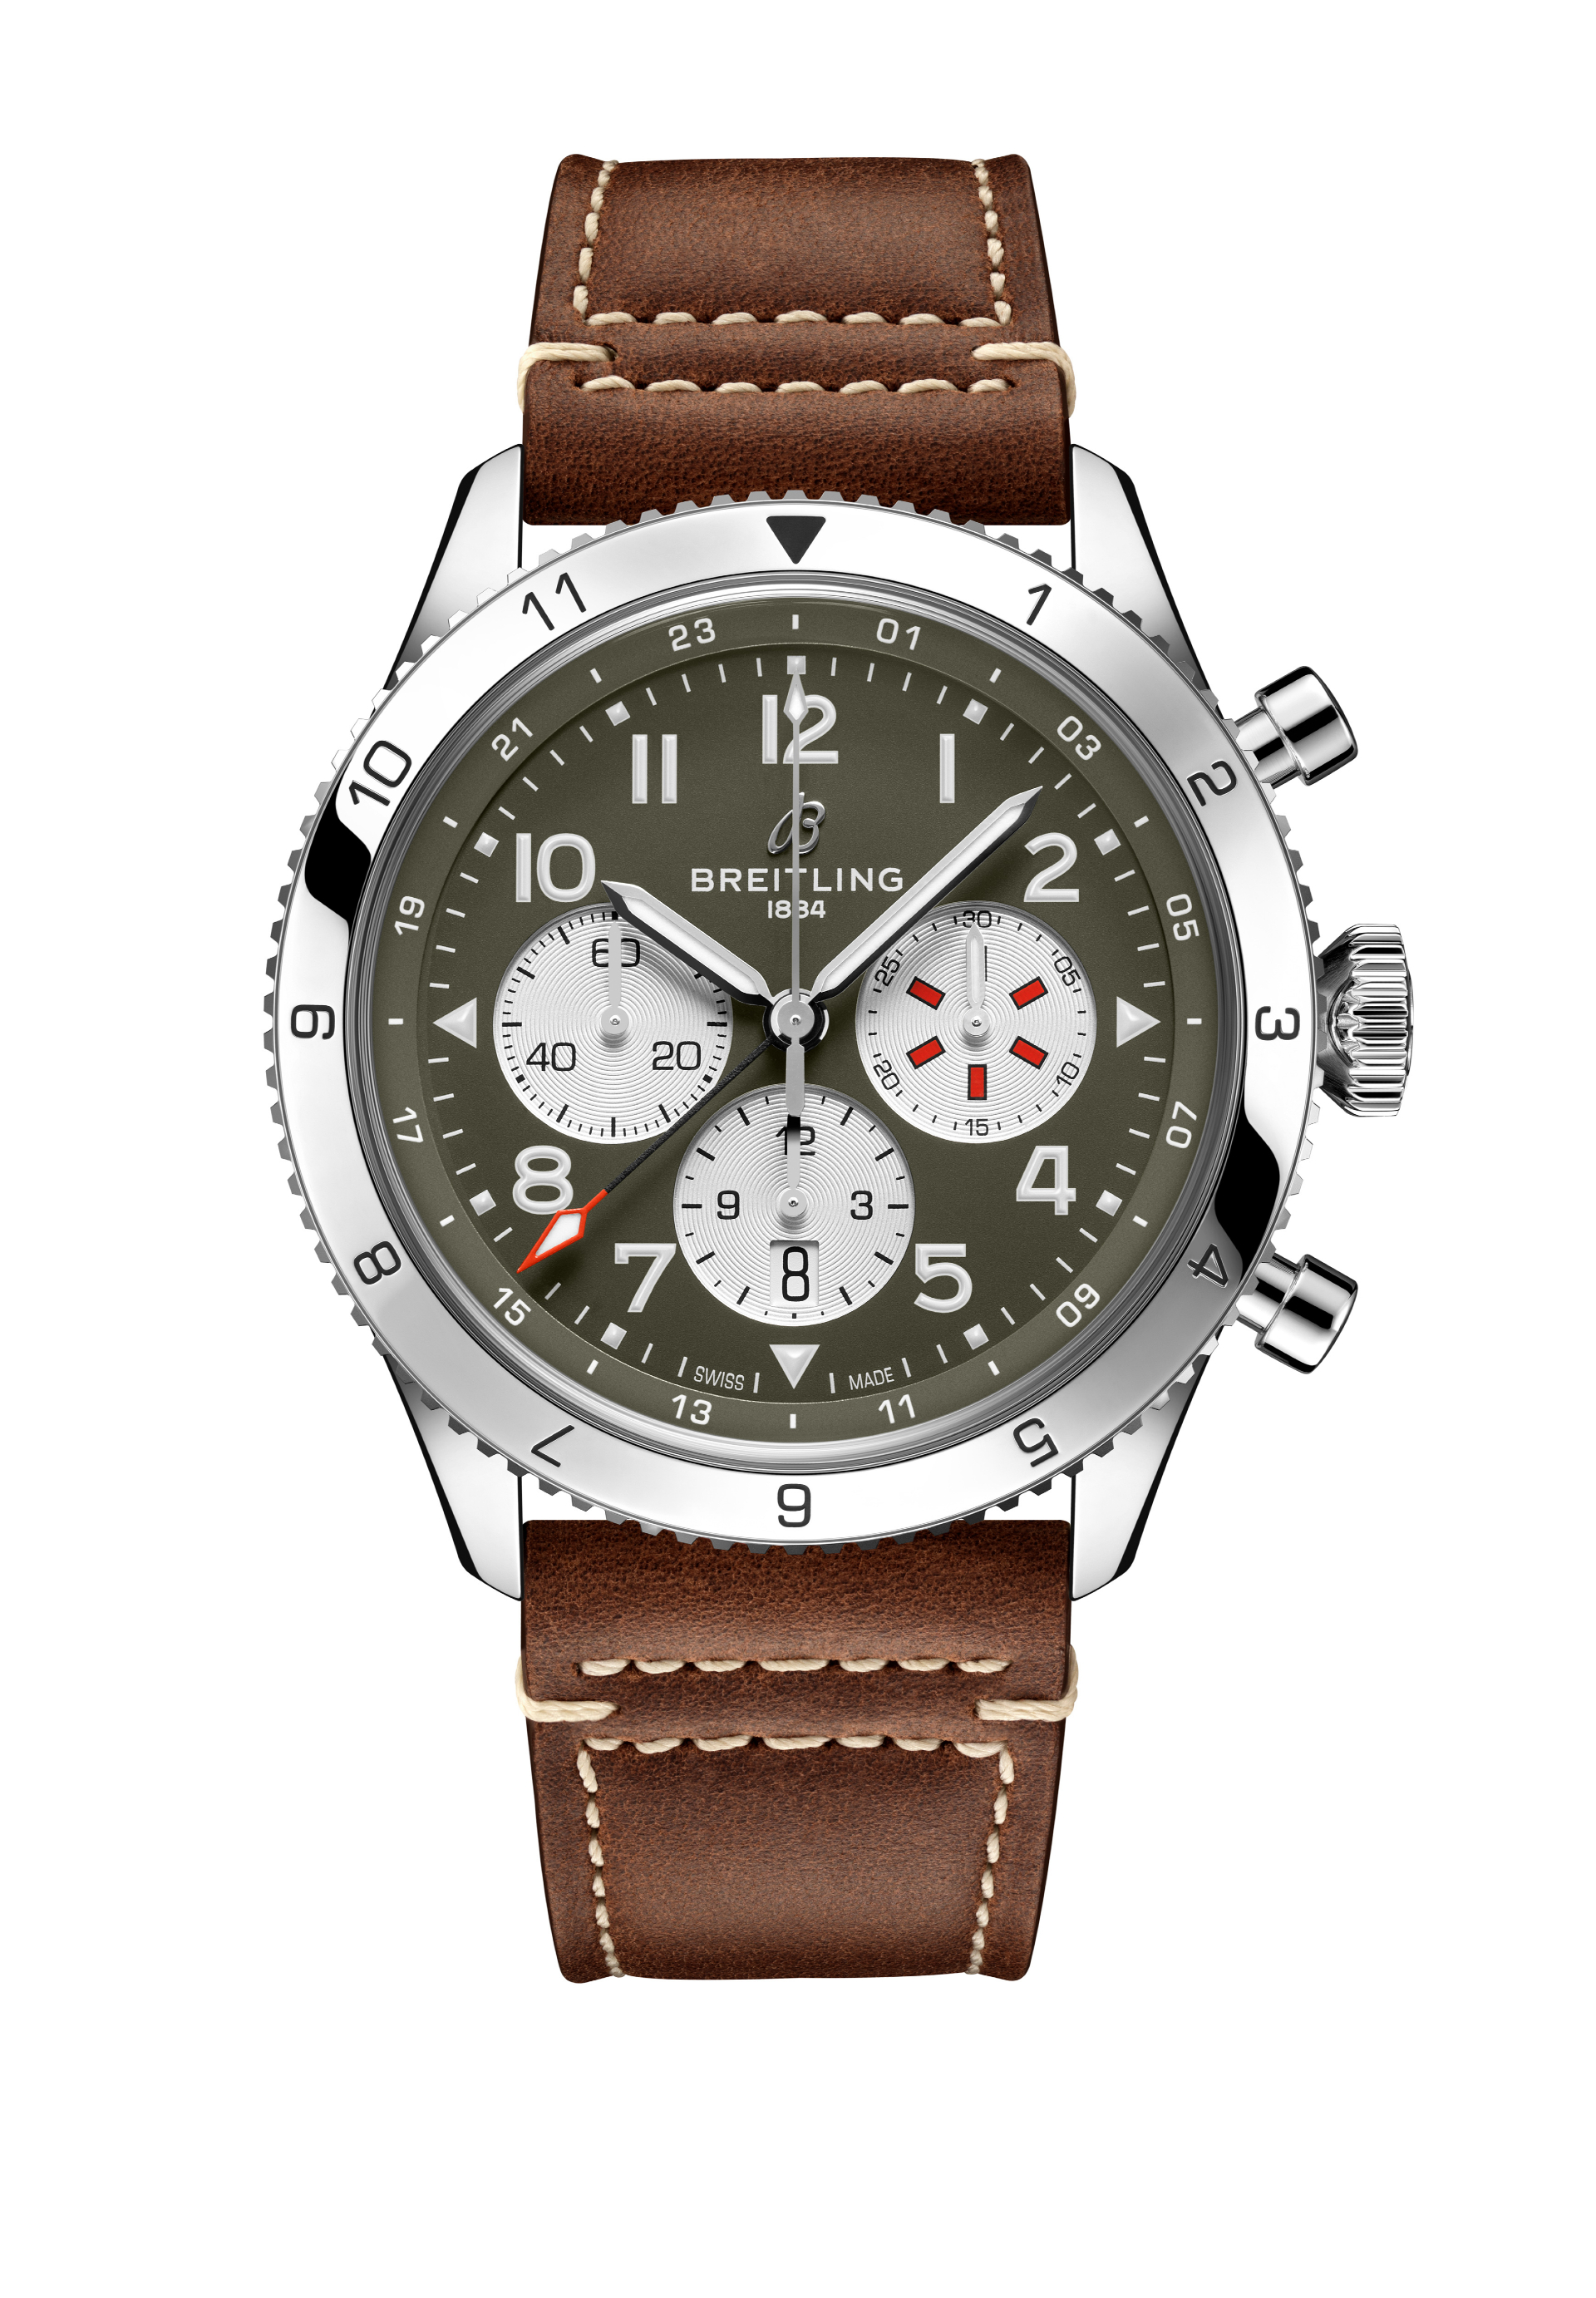 Часы Super AVI Curtiss Warhawk, Breitling